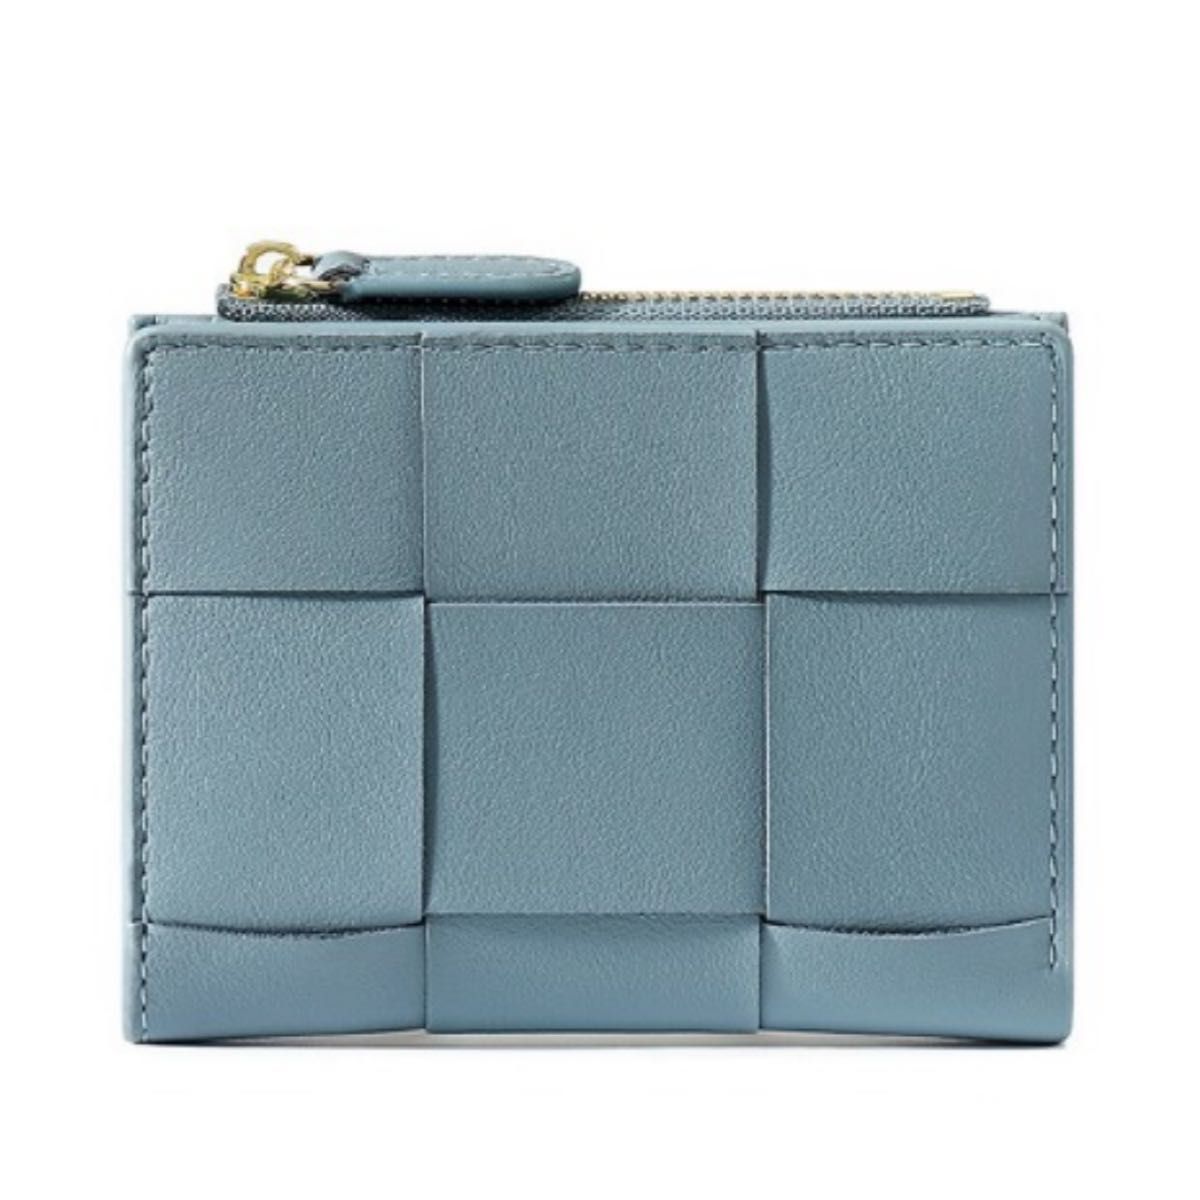 ZOZOTOWN完売人気カラー二つ折り財布ミニ財布ウォレットくすみロイヤルブルー青コンパクトスリム